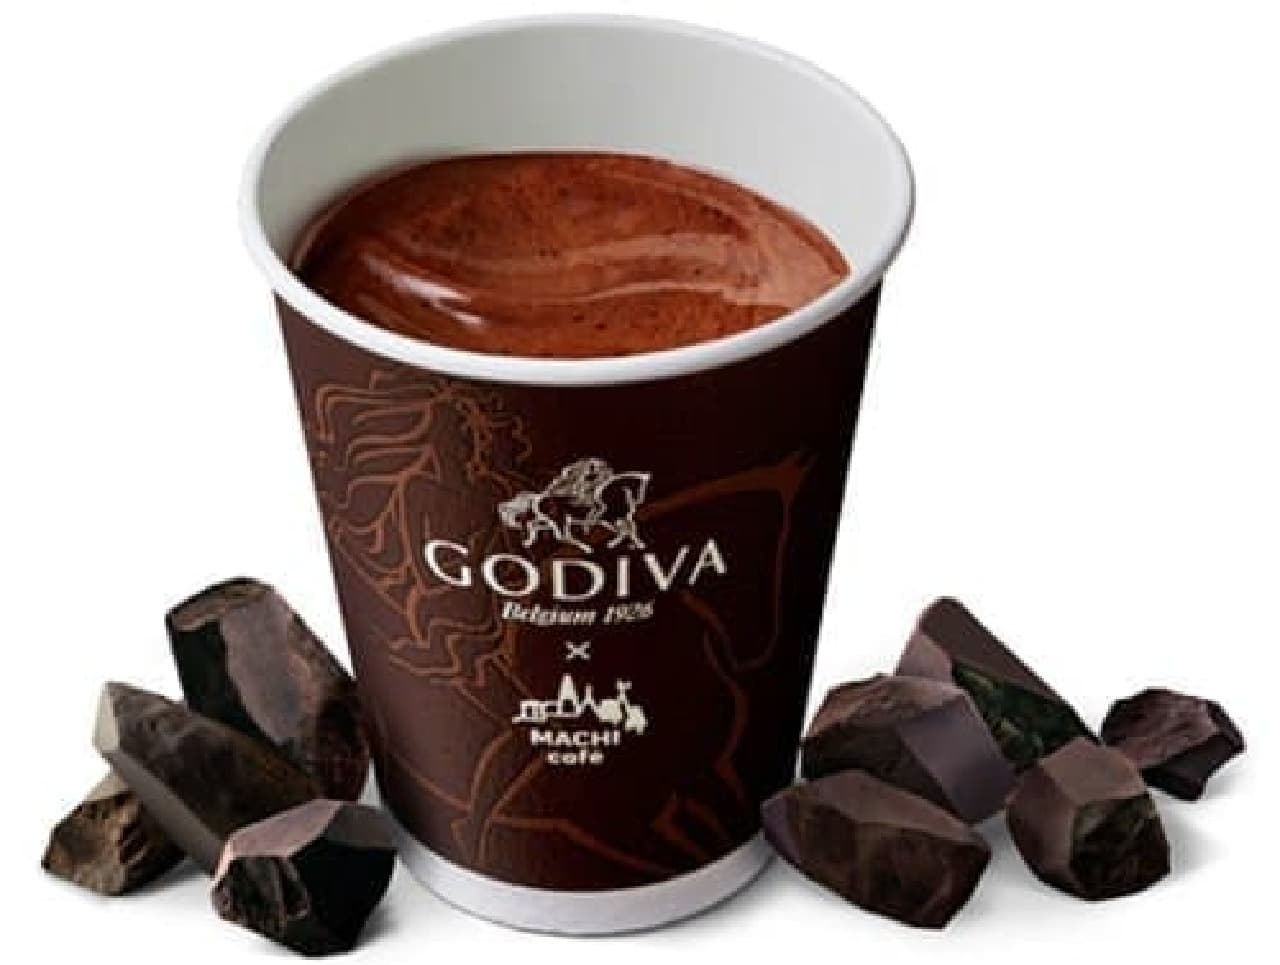 Lawson "MACHI cafe x GODIVA hot chocolate"